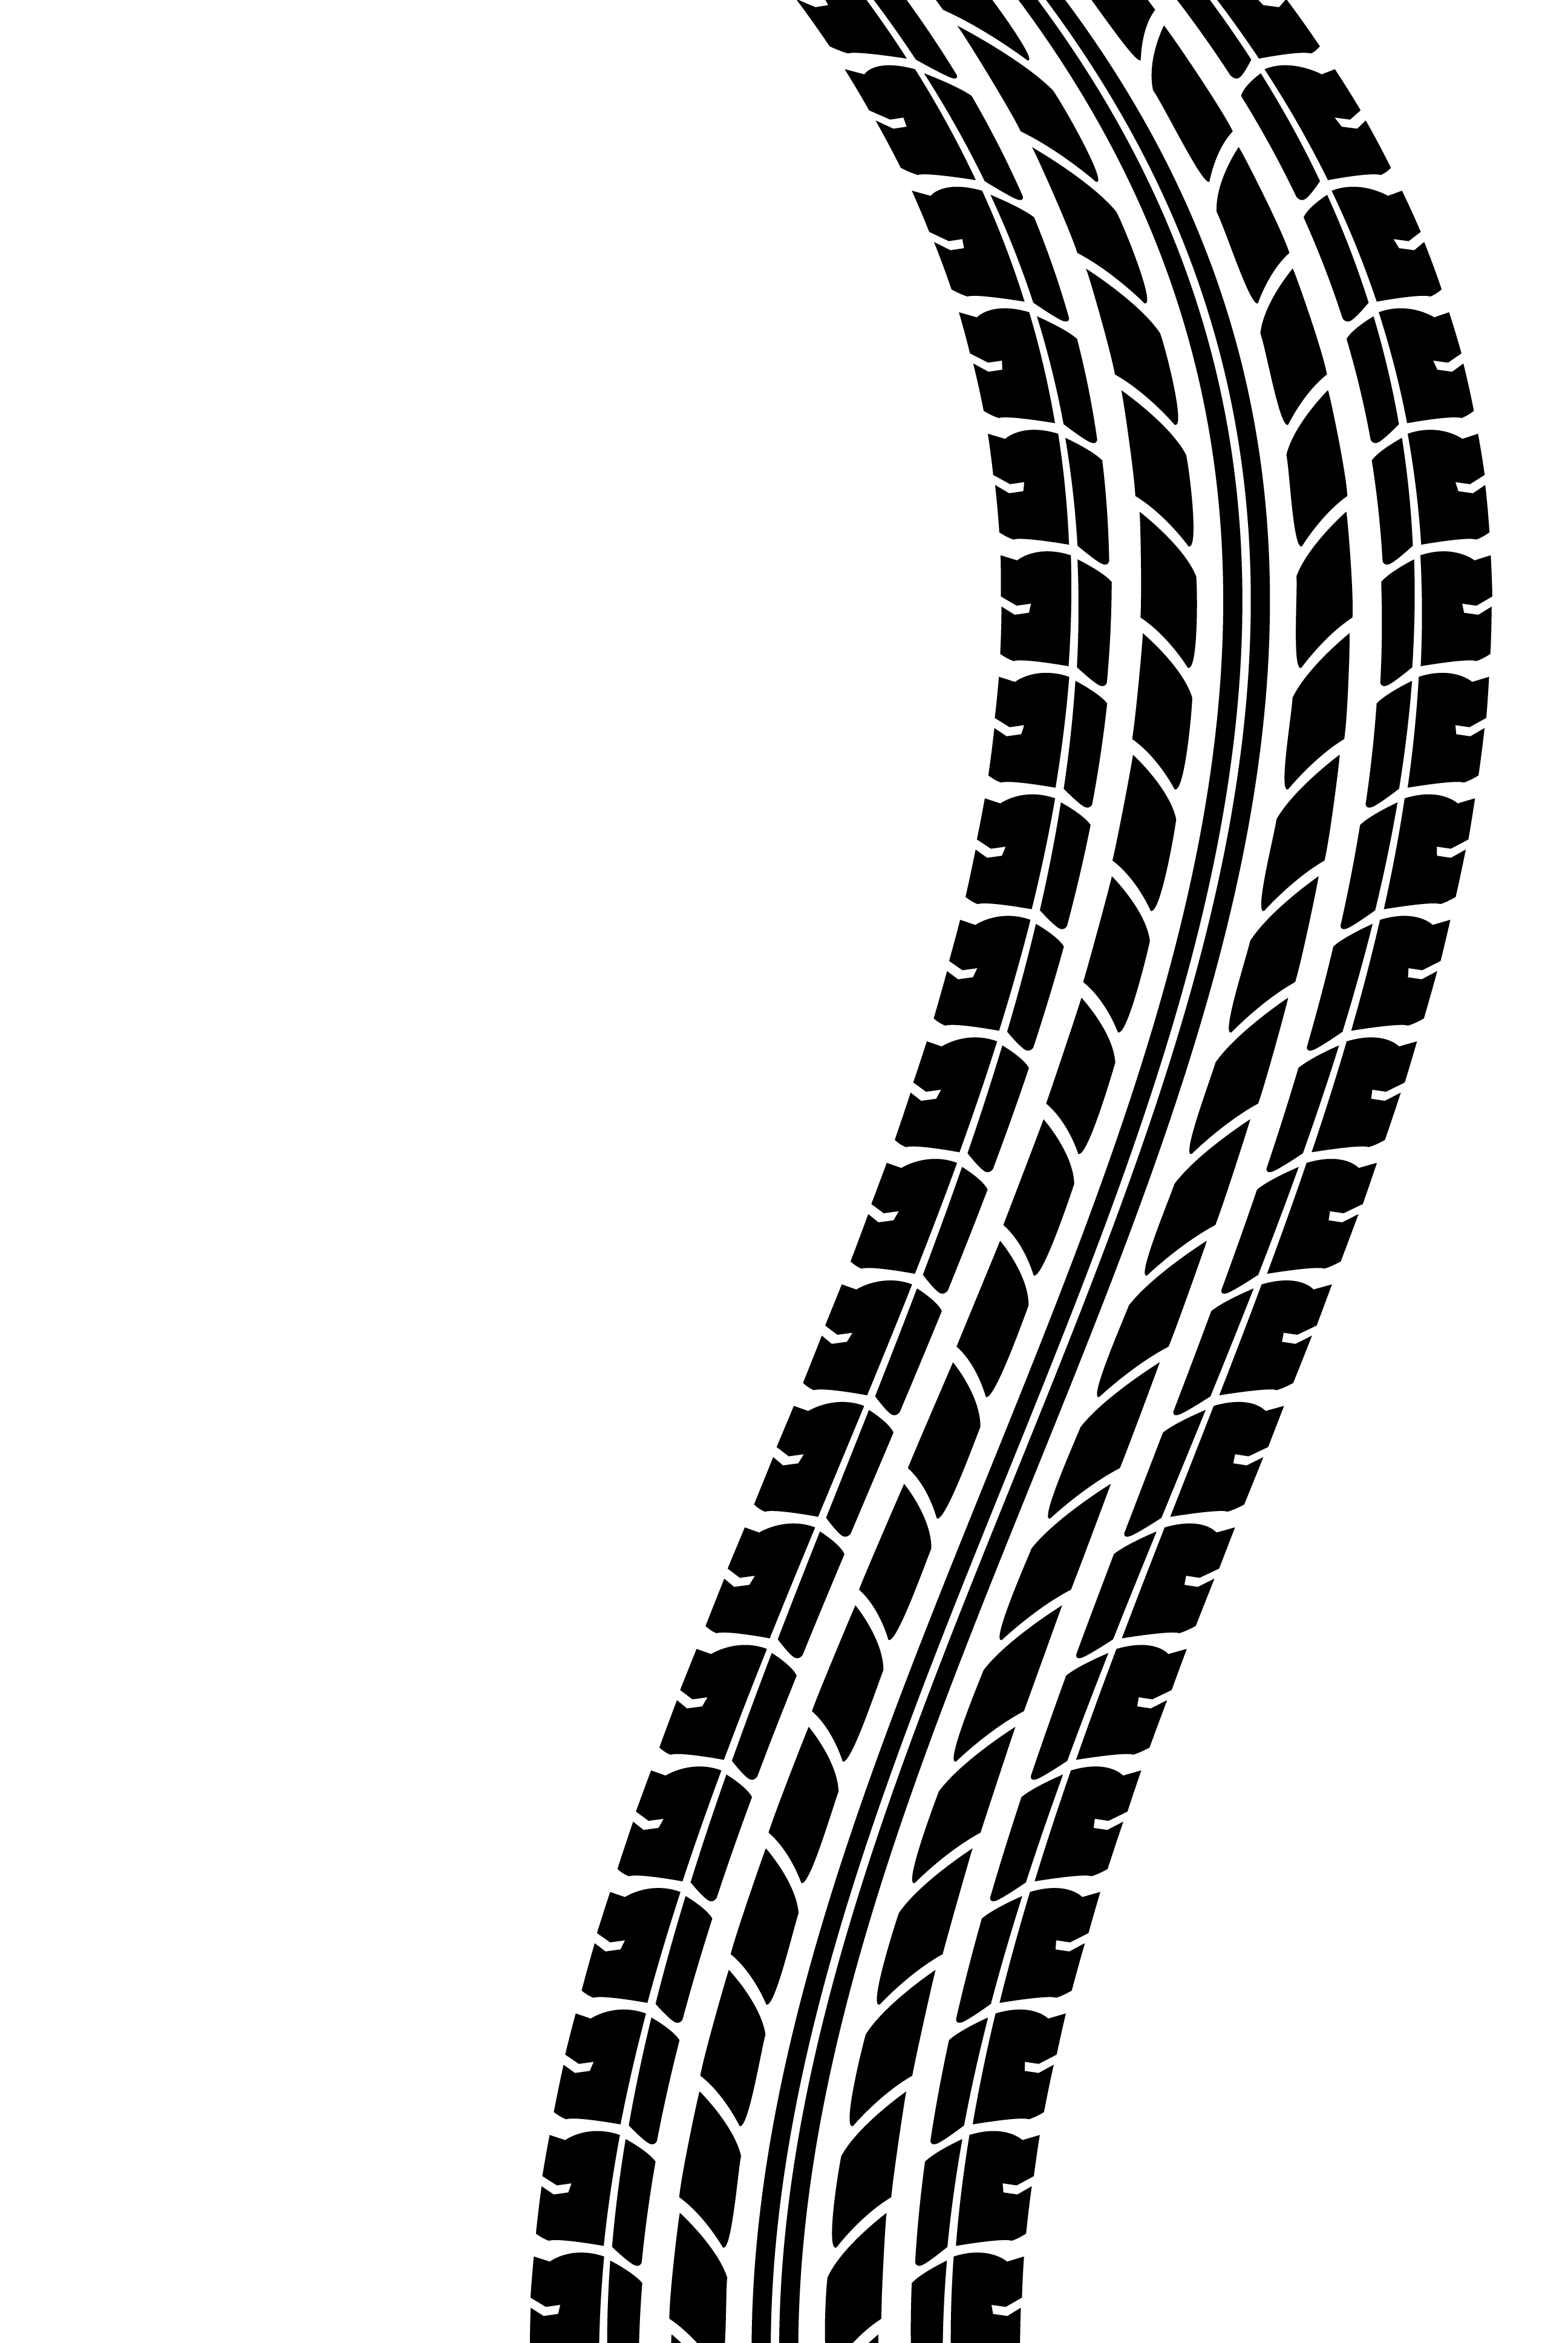 Tire Tracks Clip Art